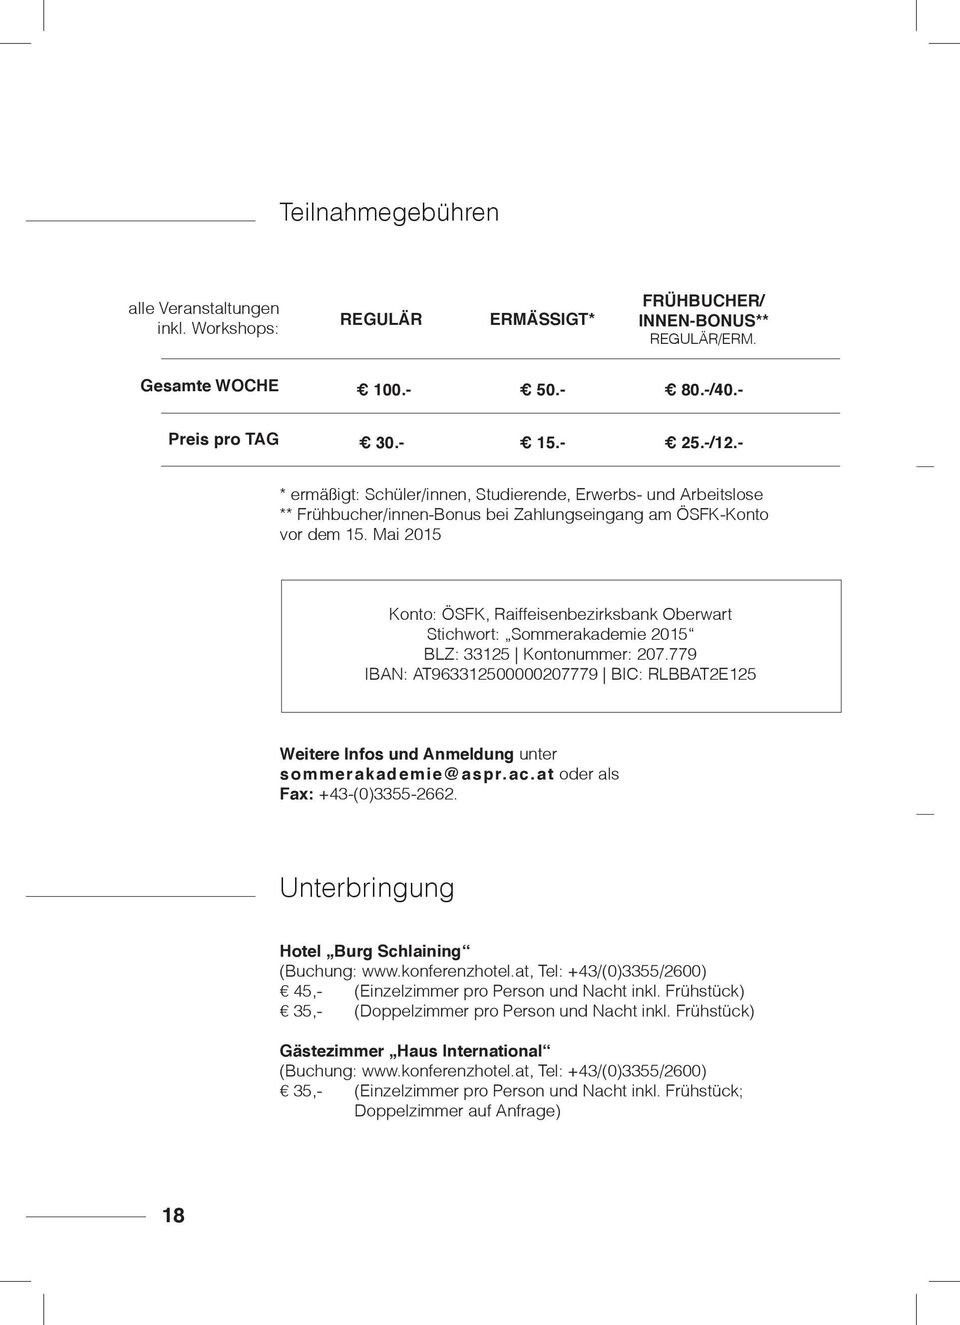 Mai 2015 Konto: ÖSFK, Raiffeisenbezirksbank Oberwart Stichwort: Sommerakademie 2015 BLZ: 33125 Kontonummer: 207.